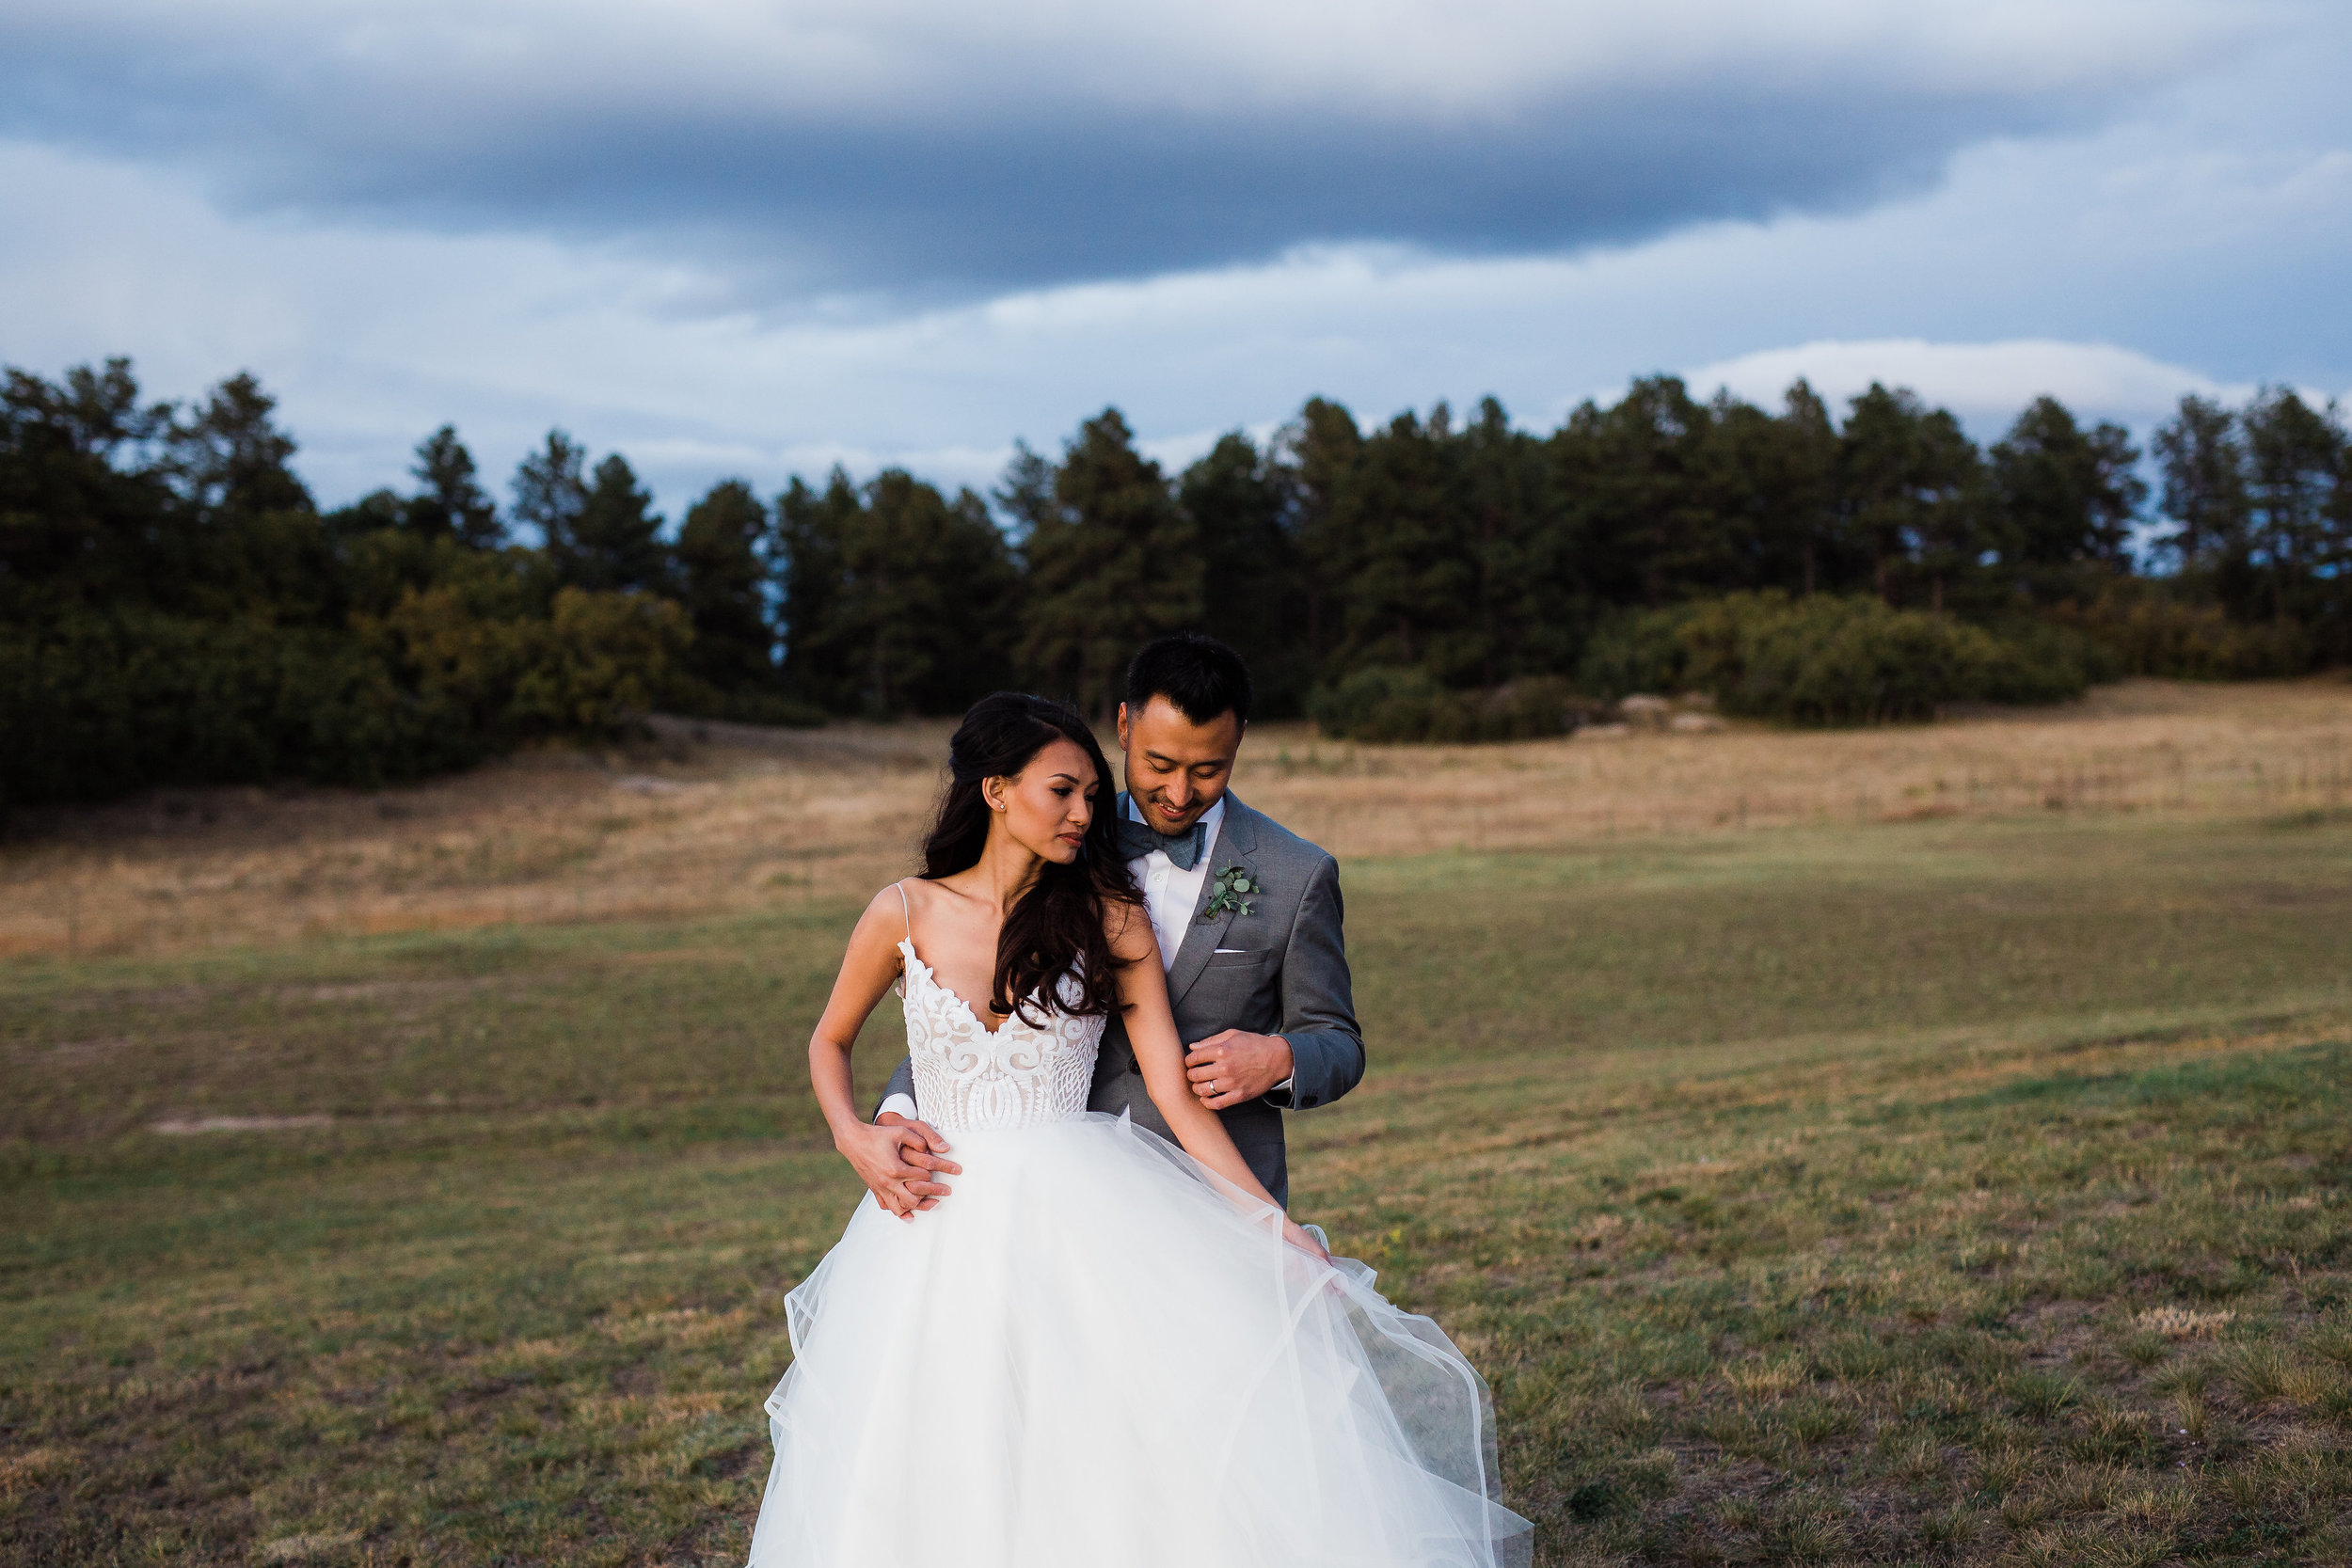 Adventure wedding photographers in Colorado Springs